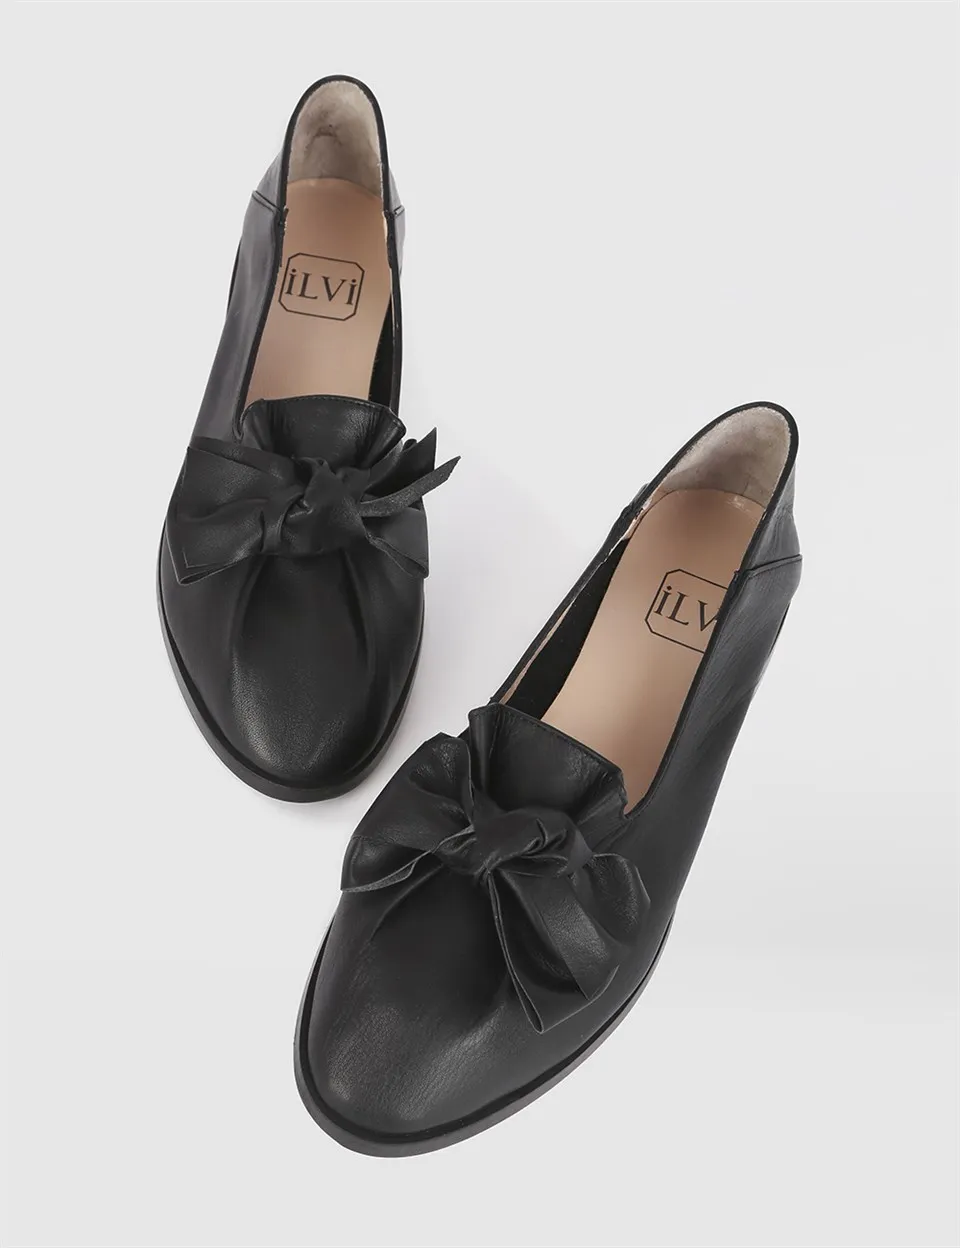 

ILVi-Genuine Leather Handmade Lerol Black Leather Women's Ballerina Women Shoes 2021 Spring/Summer